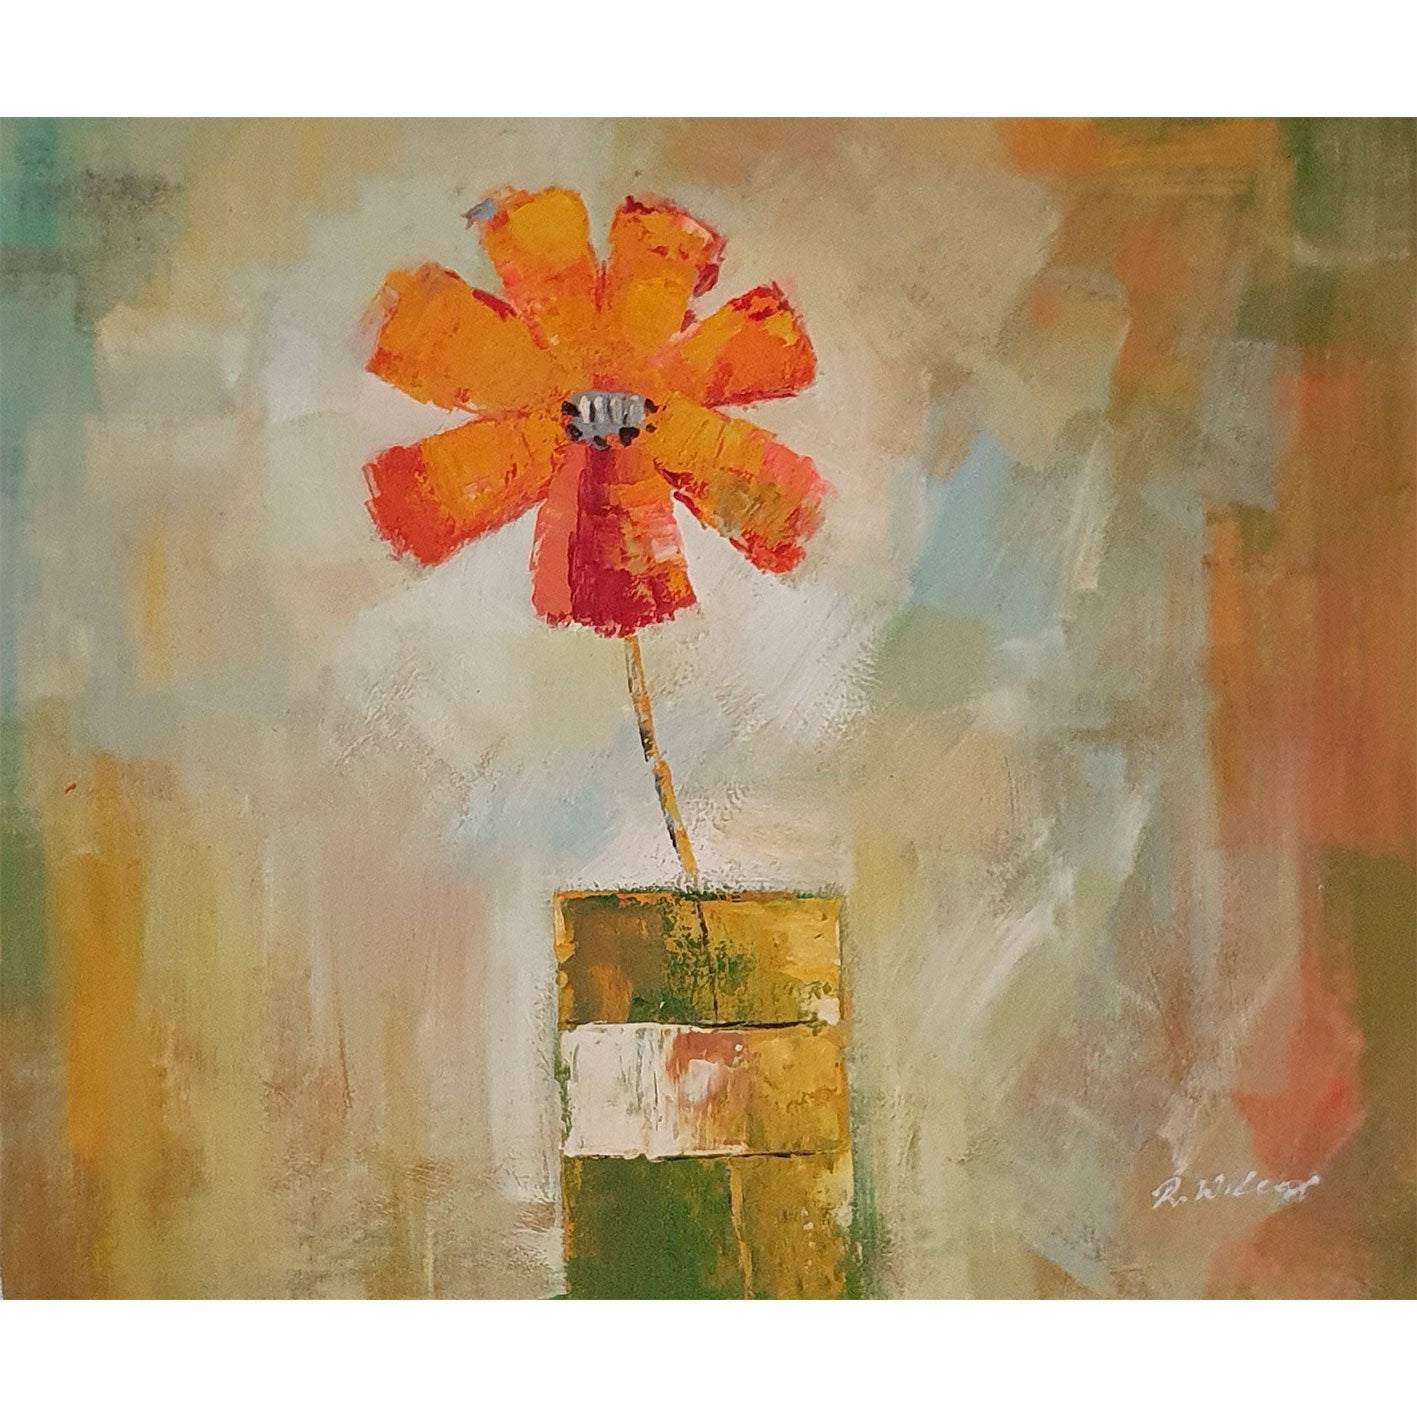 Vanguard Flower Painting 60x50 cm